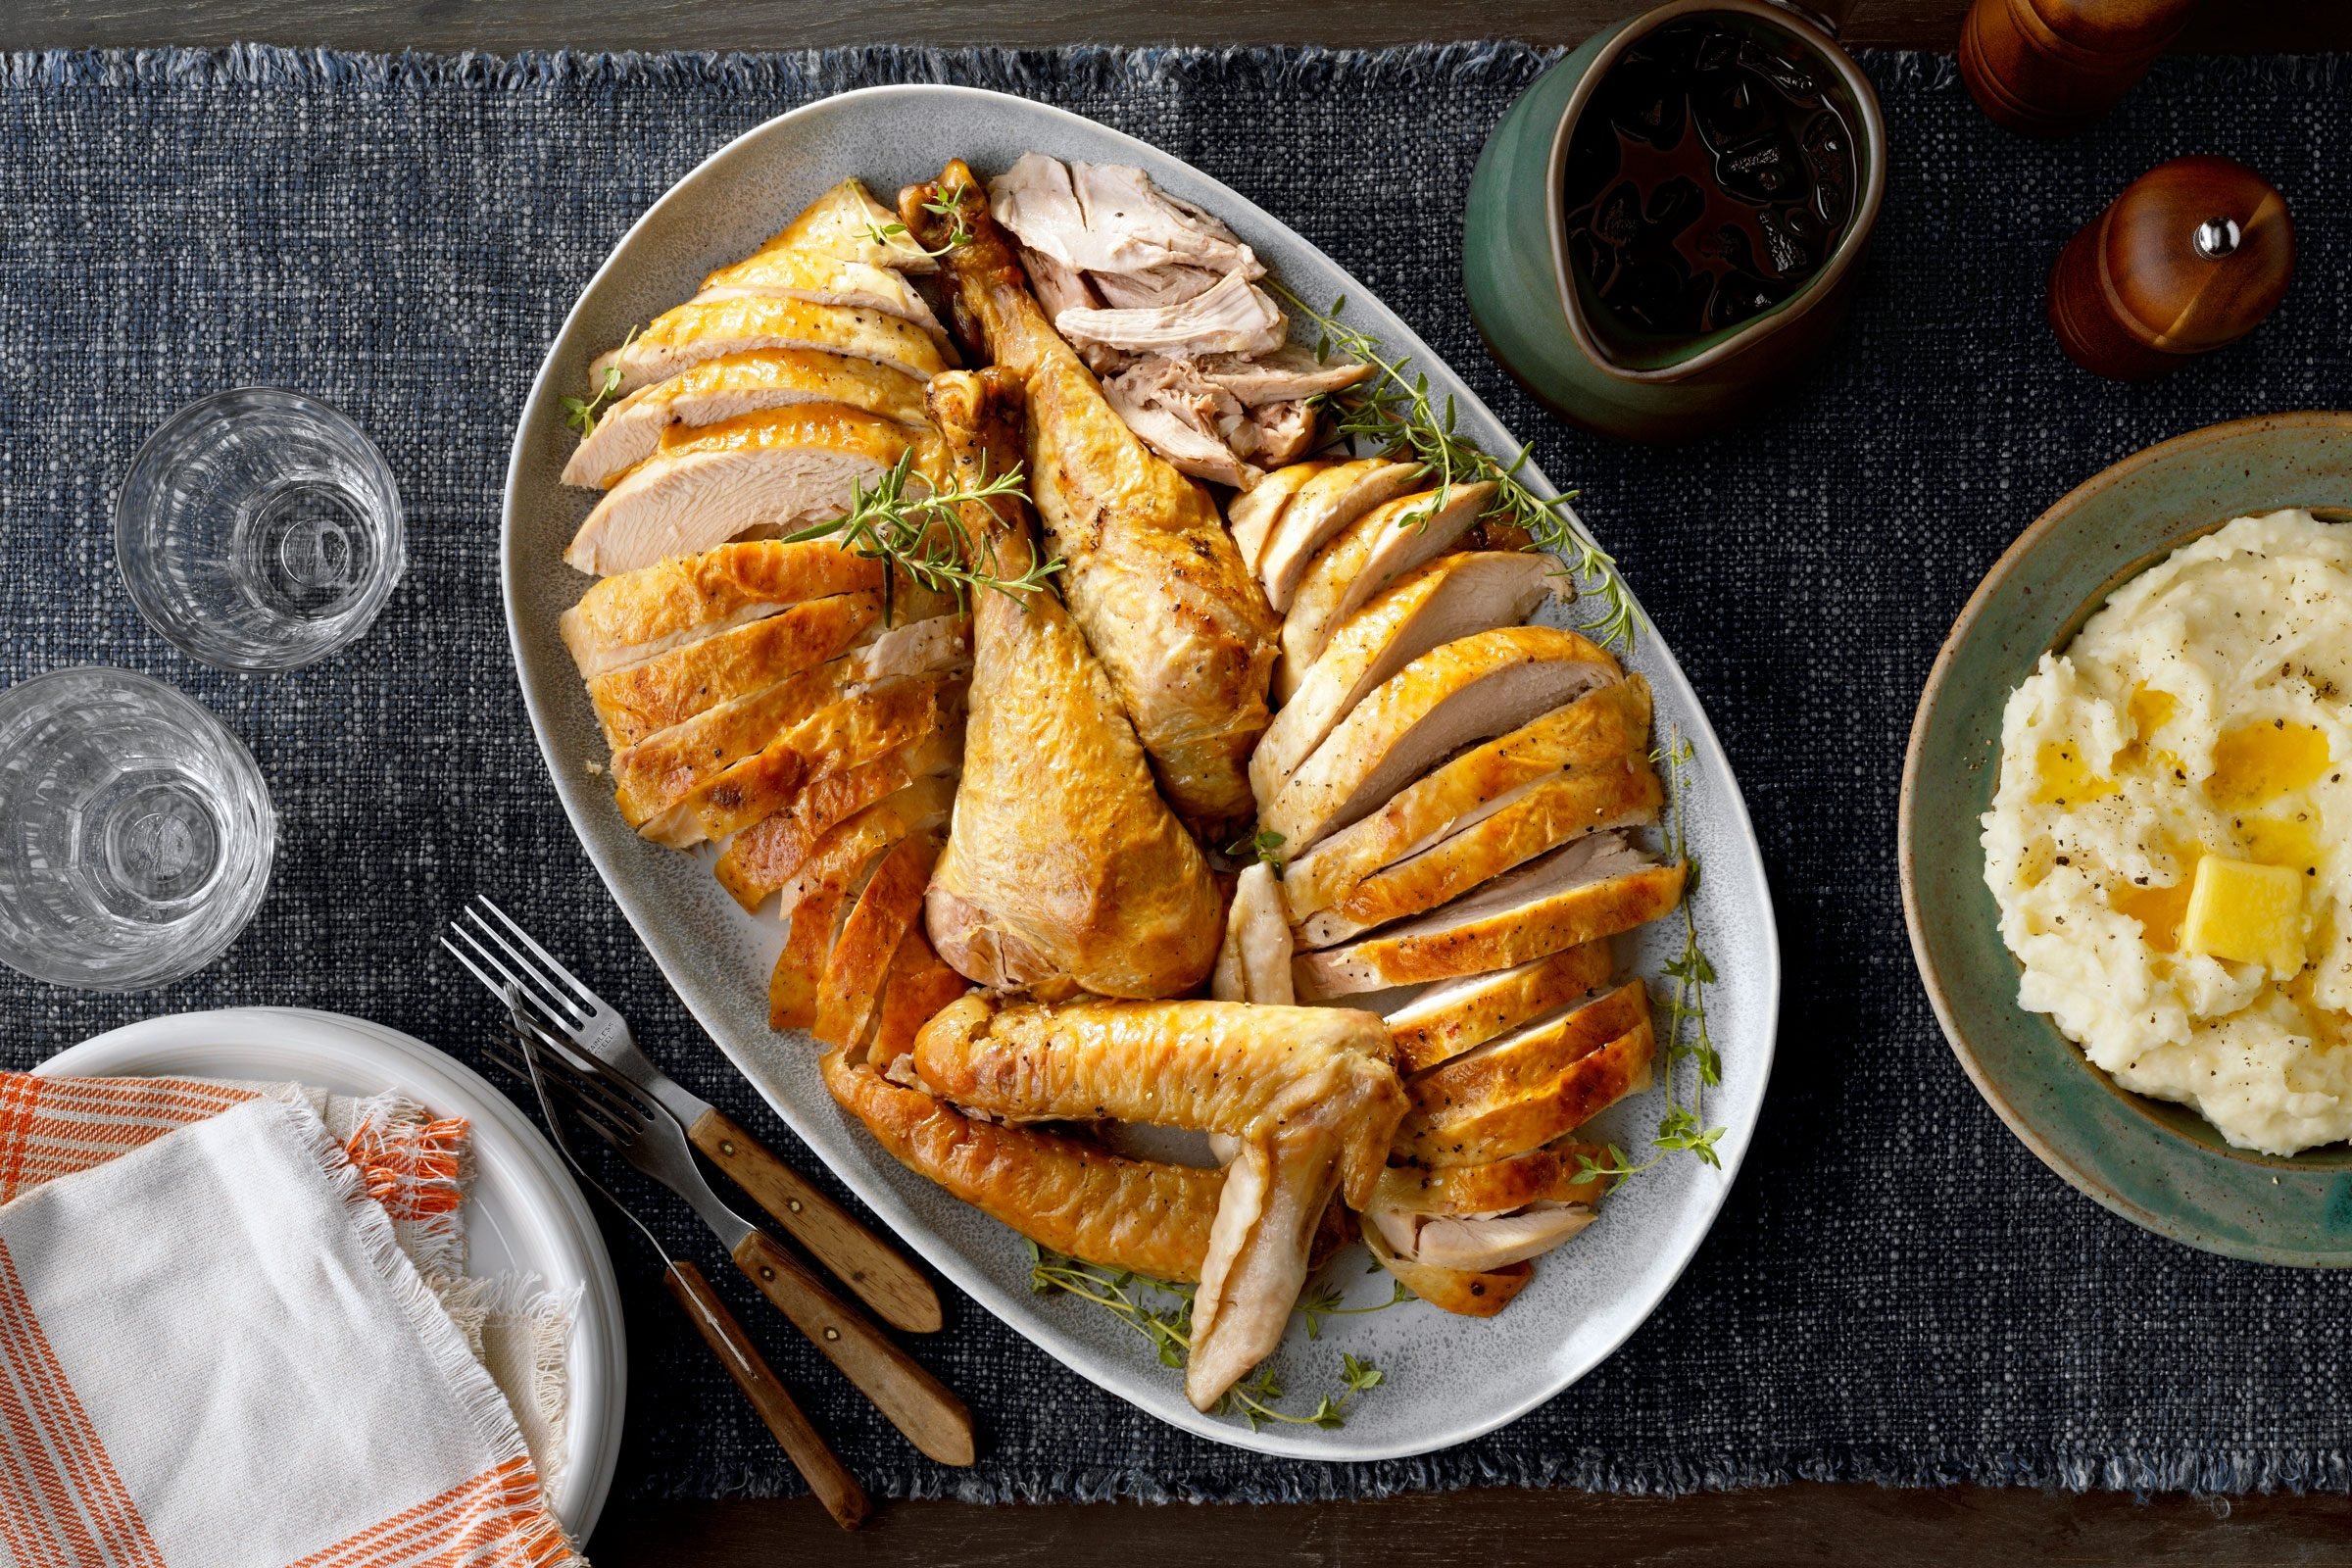 Best Turkey Brine Recipe - Sweet and Simple Living